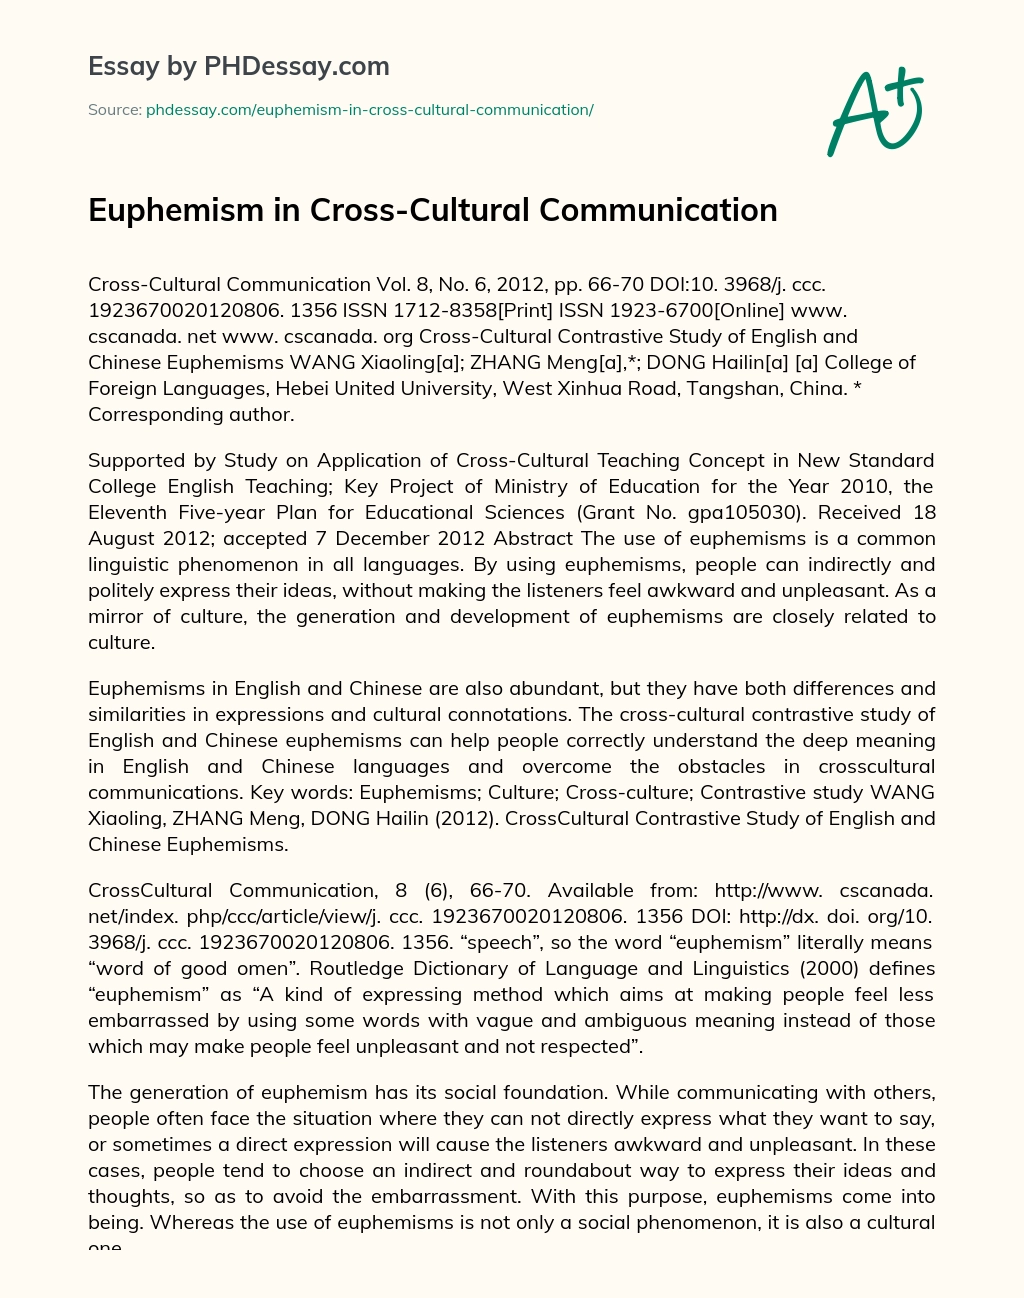 Euphemism in Cross-Cultural Communication essay